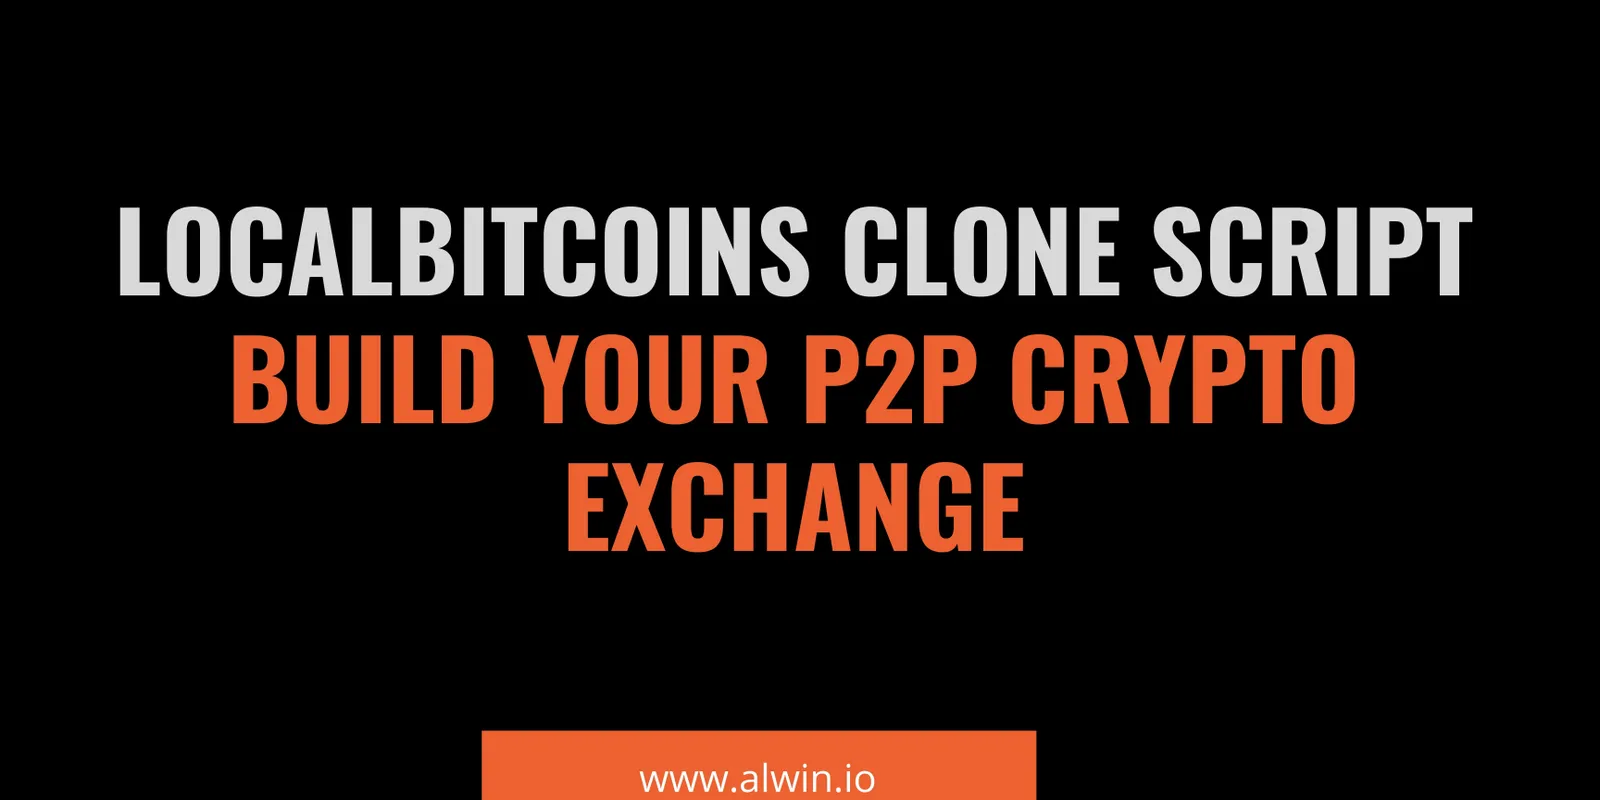 Localbitcoins clone script-Build your p2p crypto exchange: